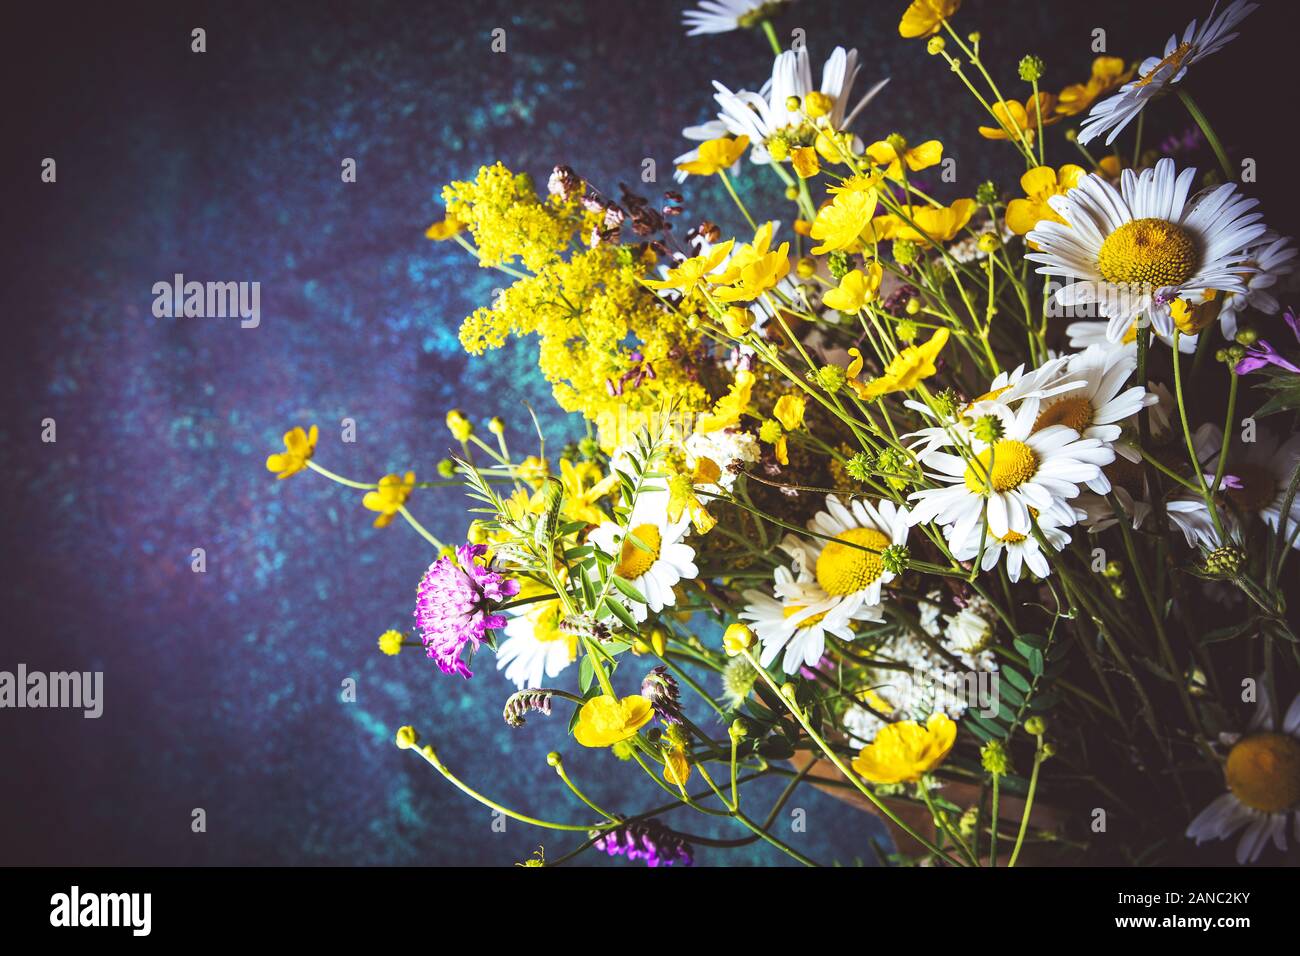 Wild Flowers Bouquet on Rustic Dark Background Stock Photo